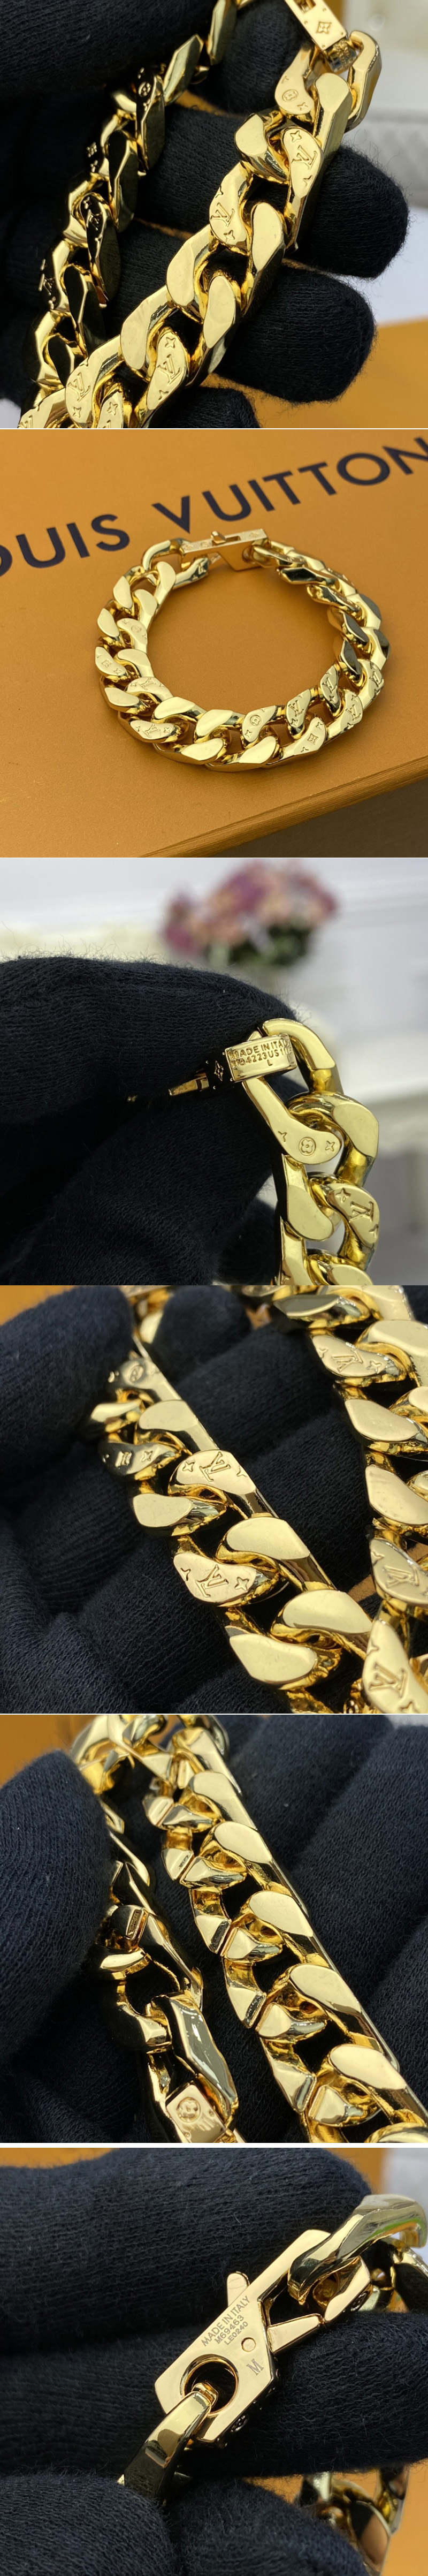 Shop Louis Vuitton Chain Links Bracelet (M00306, M00305) by lifeisfun